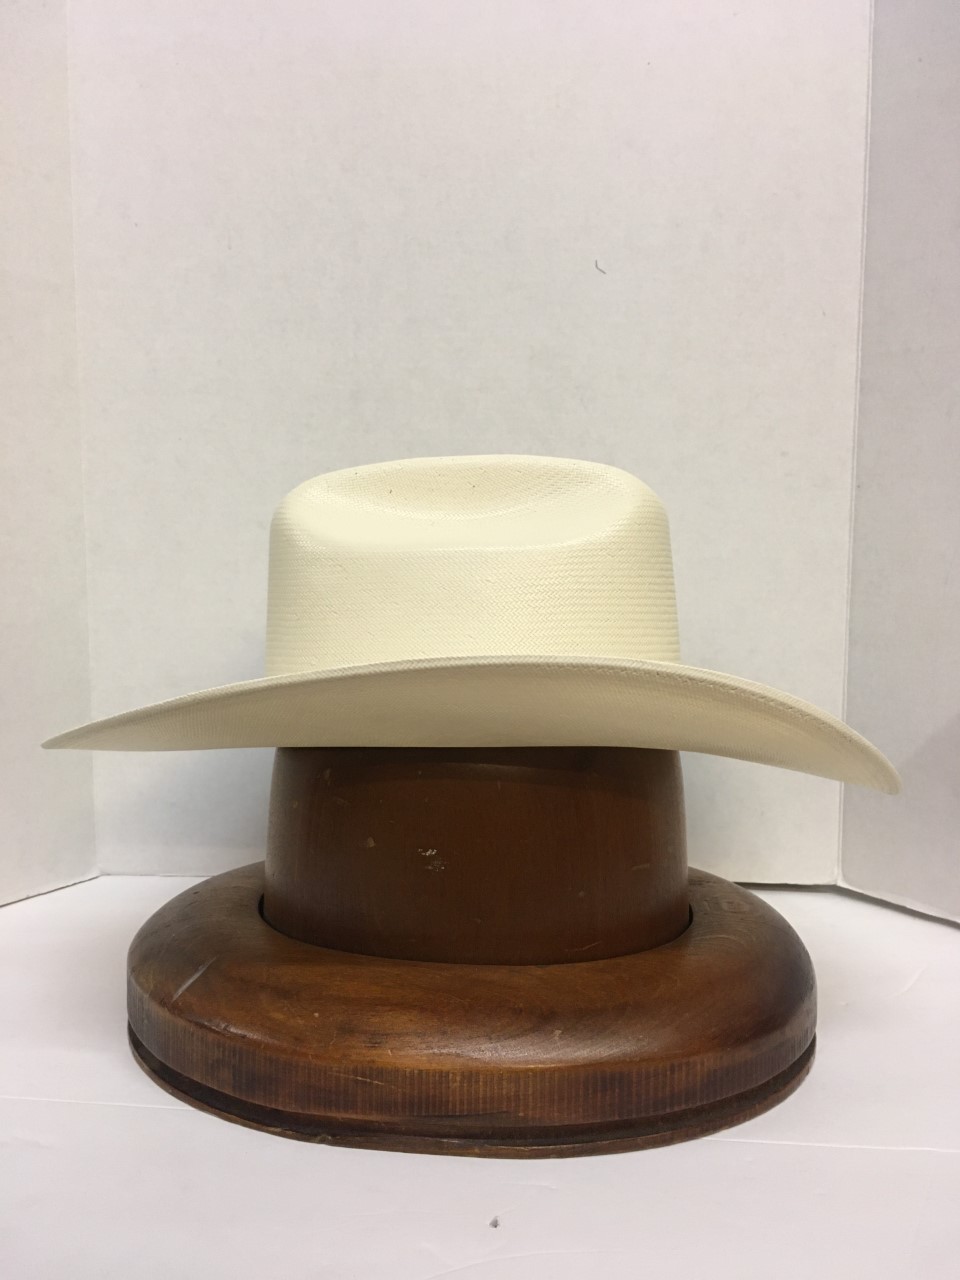 El Noble 500X Straw Cowboy Hat